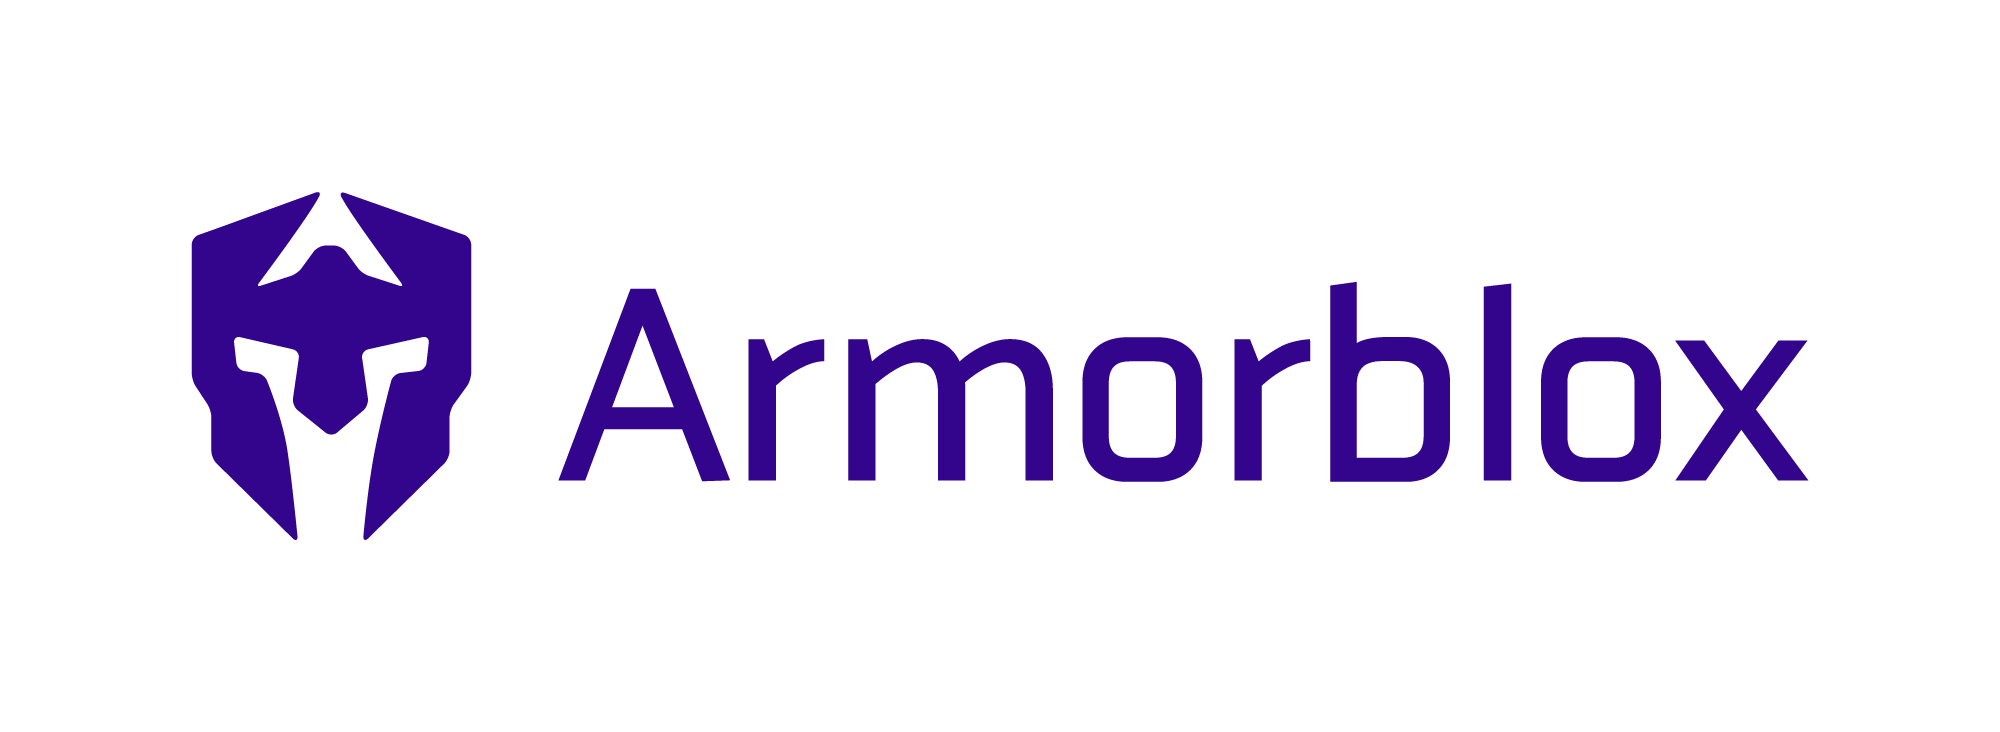 Armorblox_logo.png